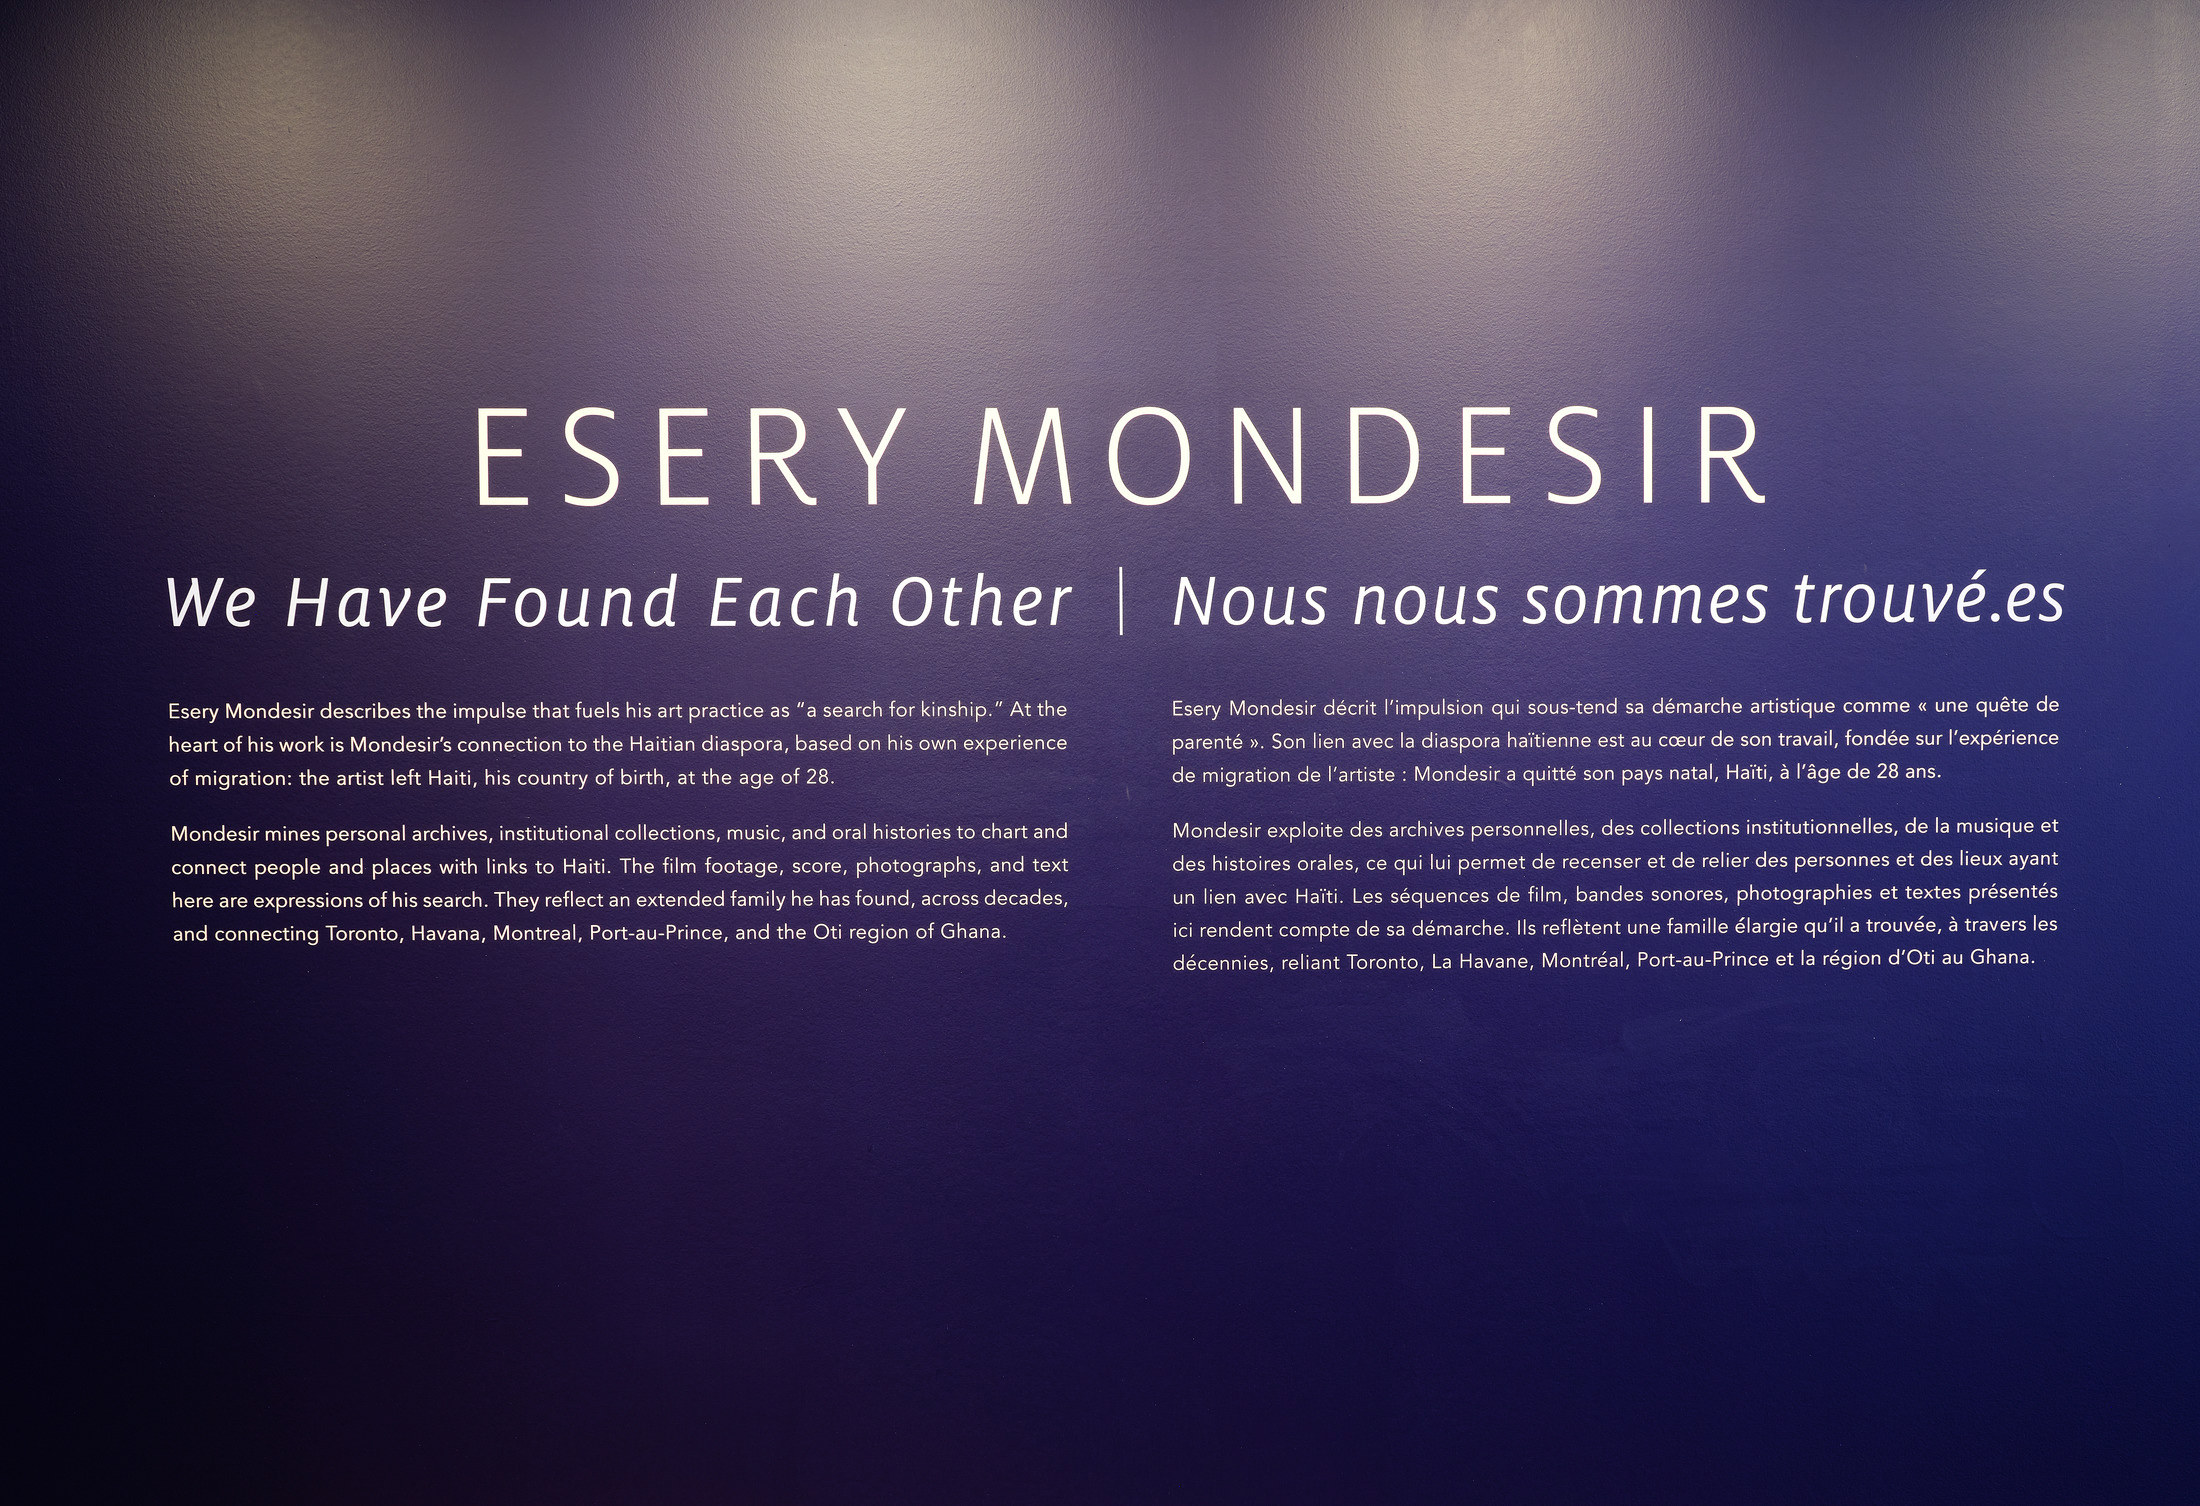     Esery Mondesir, We Have Found Each Other, installation view, Art Gallery of Ontario, 2021–22. Artworks © Esery Mondesir. Photo © AGO

